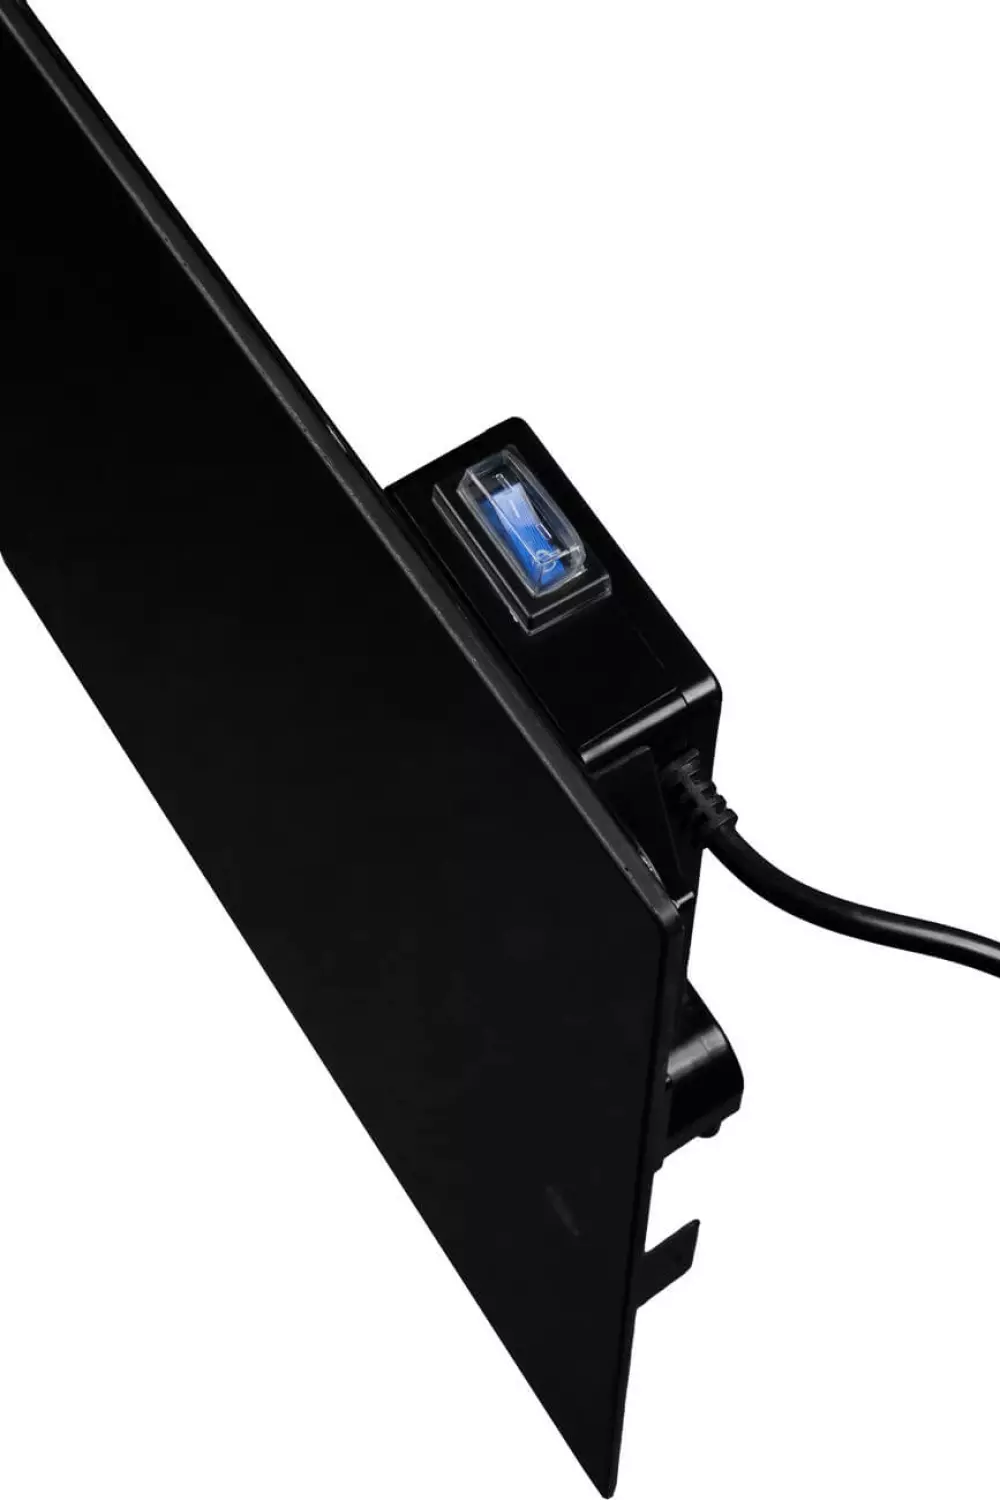 Eurom Sani 800 Wifi Panneau infrarouge noir - 800W - 13kg